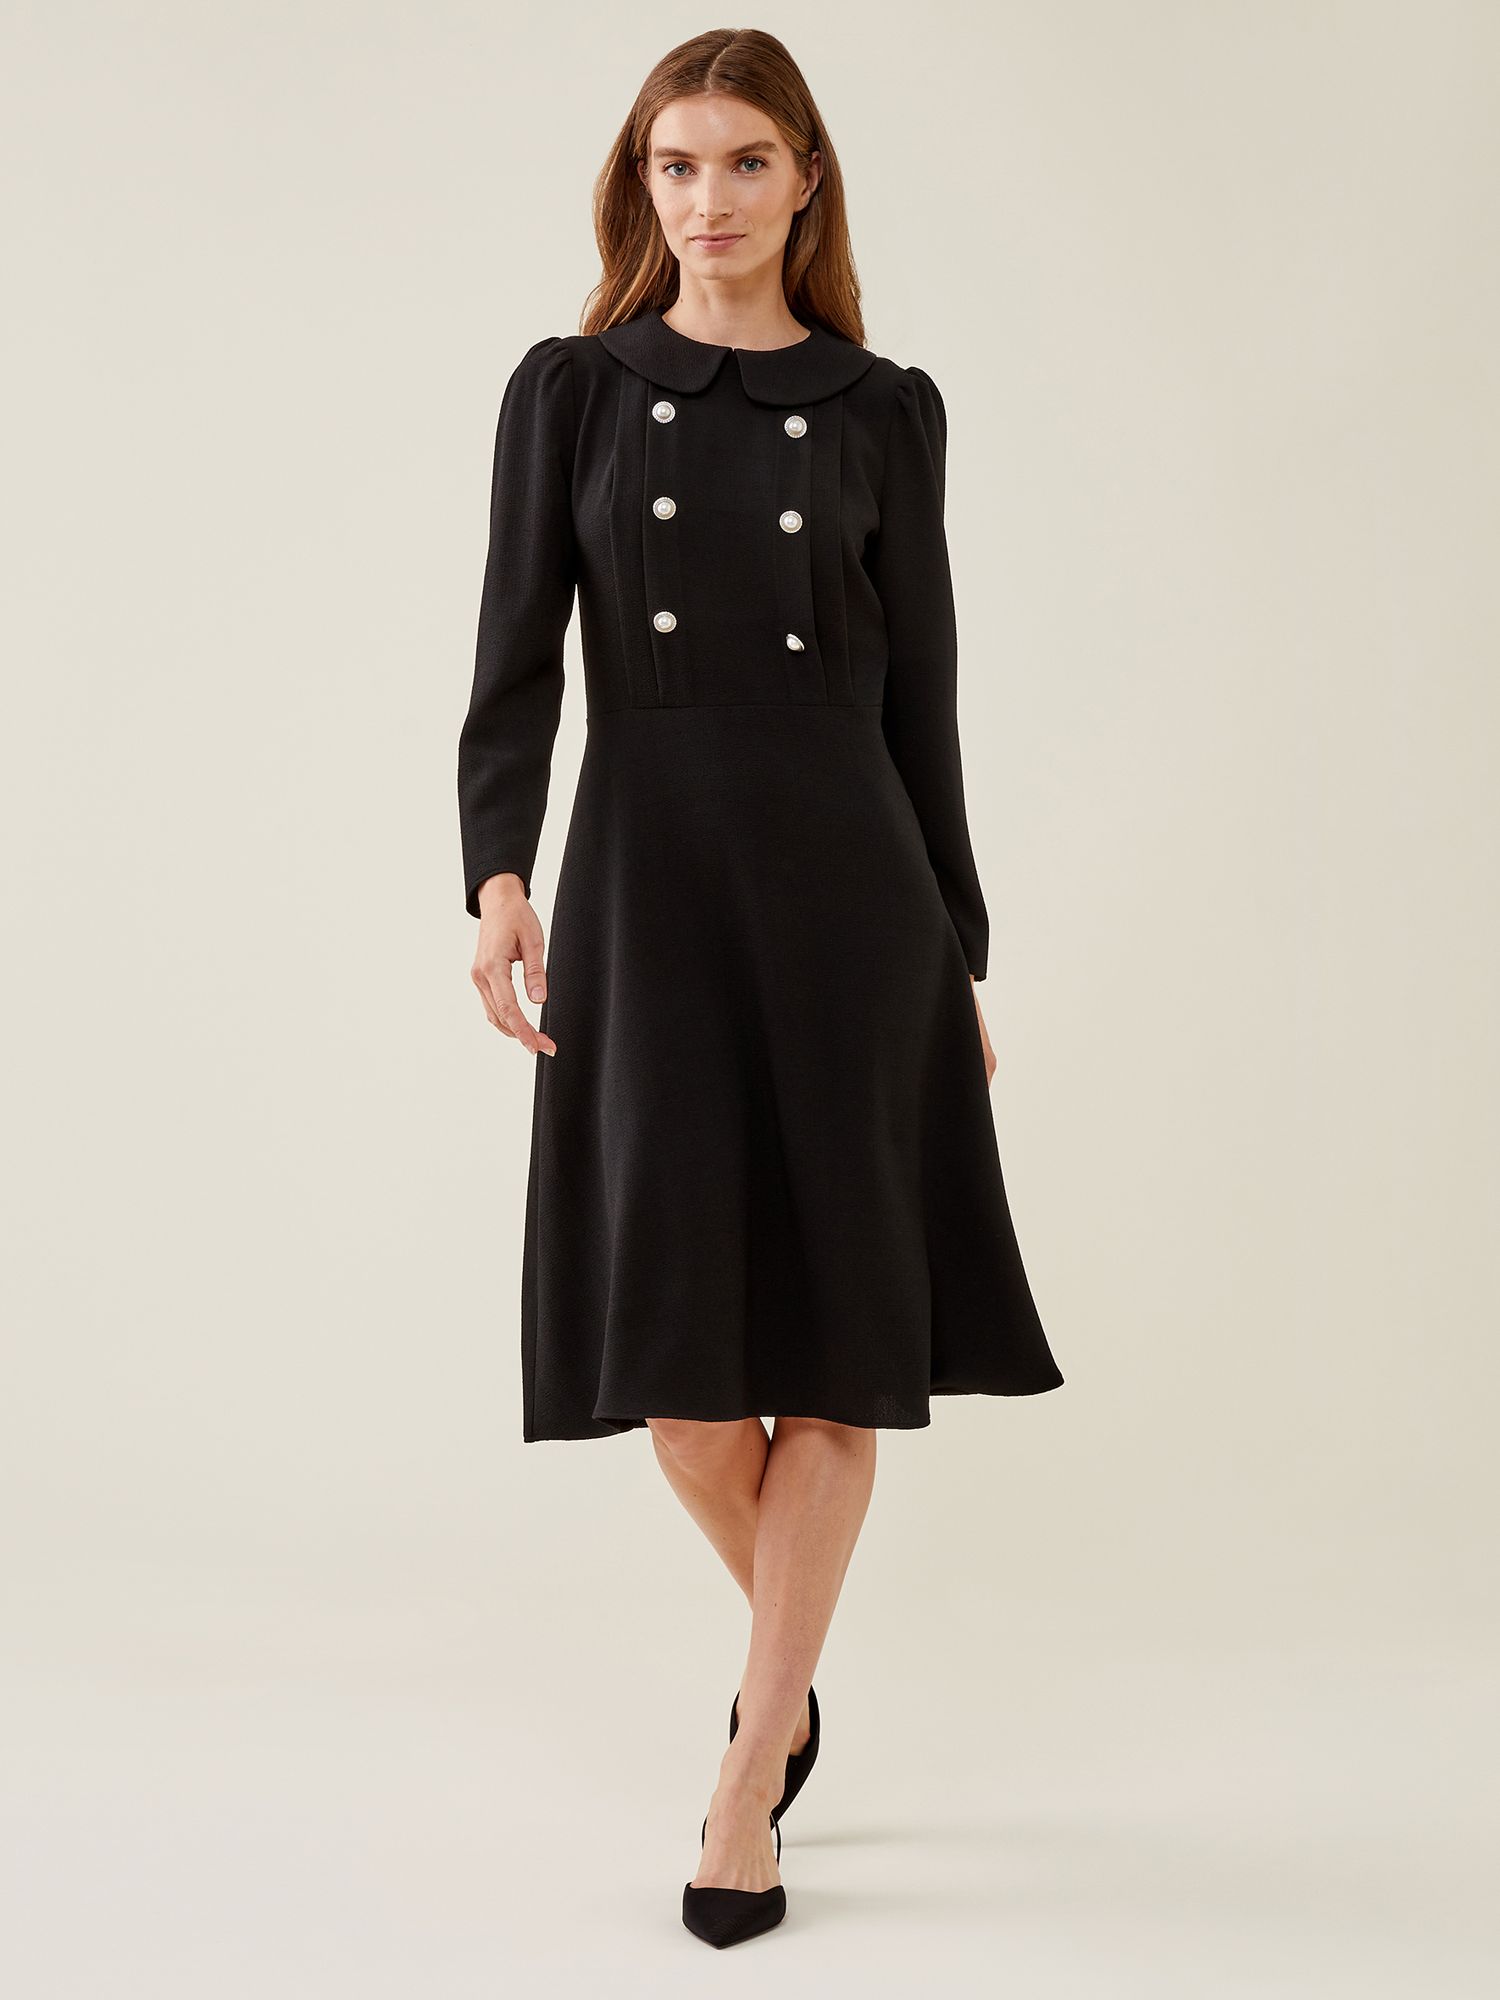 Finery Jadey Crepe Midi Dress, Black at John Lewis & Partners